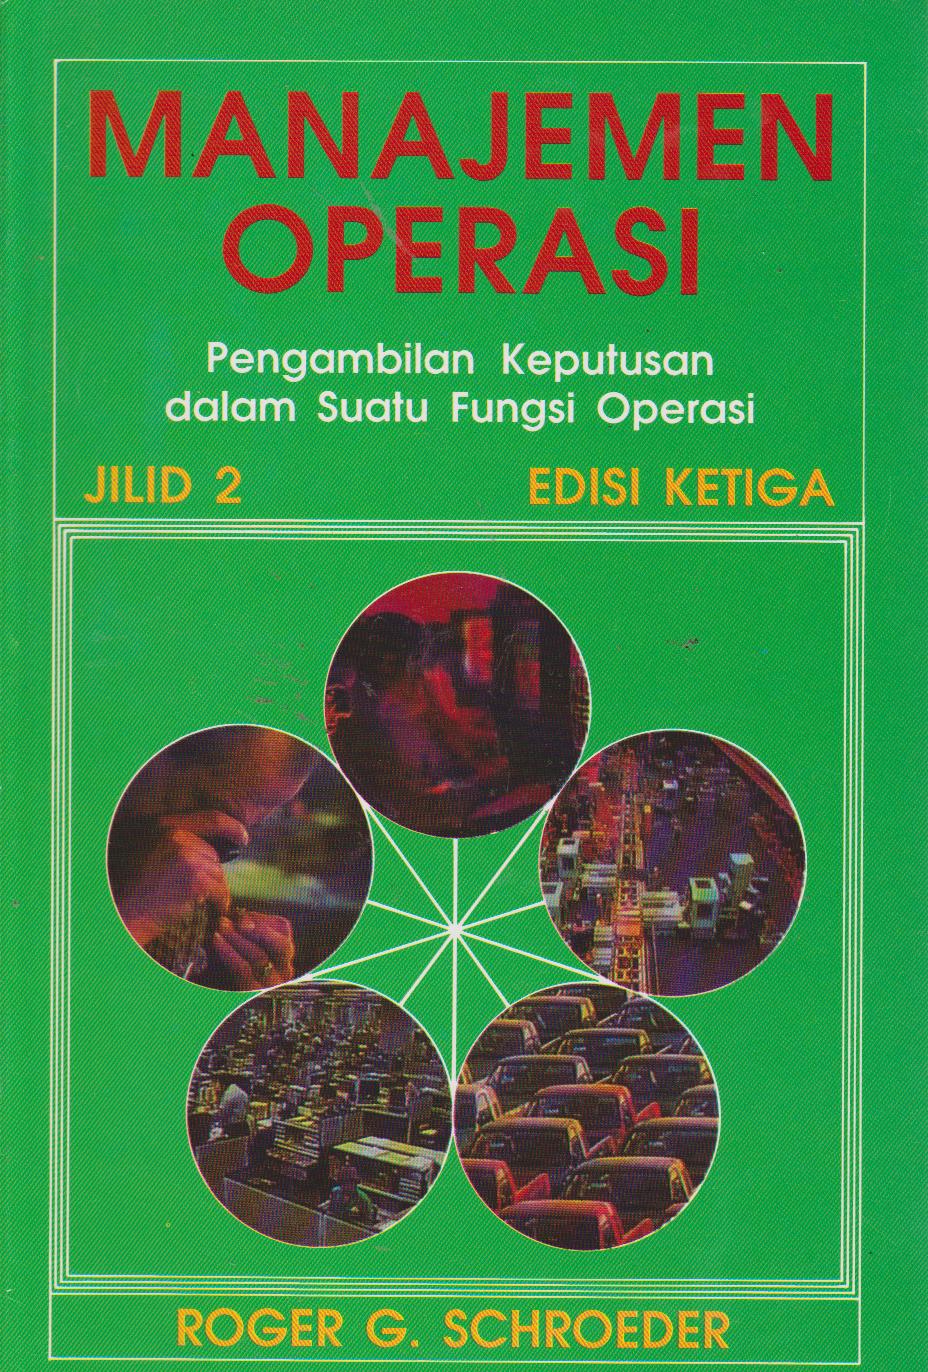 Manajemen Operasi: Pengambilan keputusan dalam suatu fungsi operasi Jilid 2 (1989)